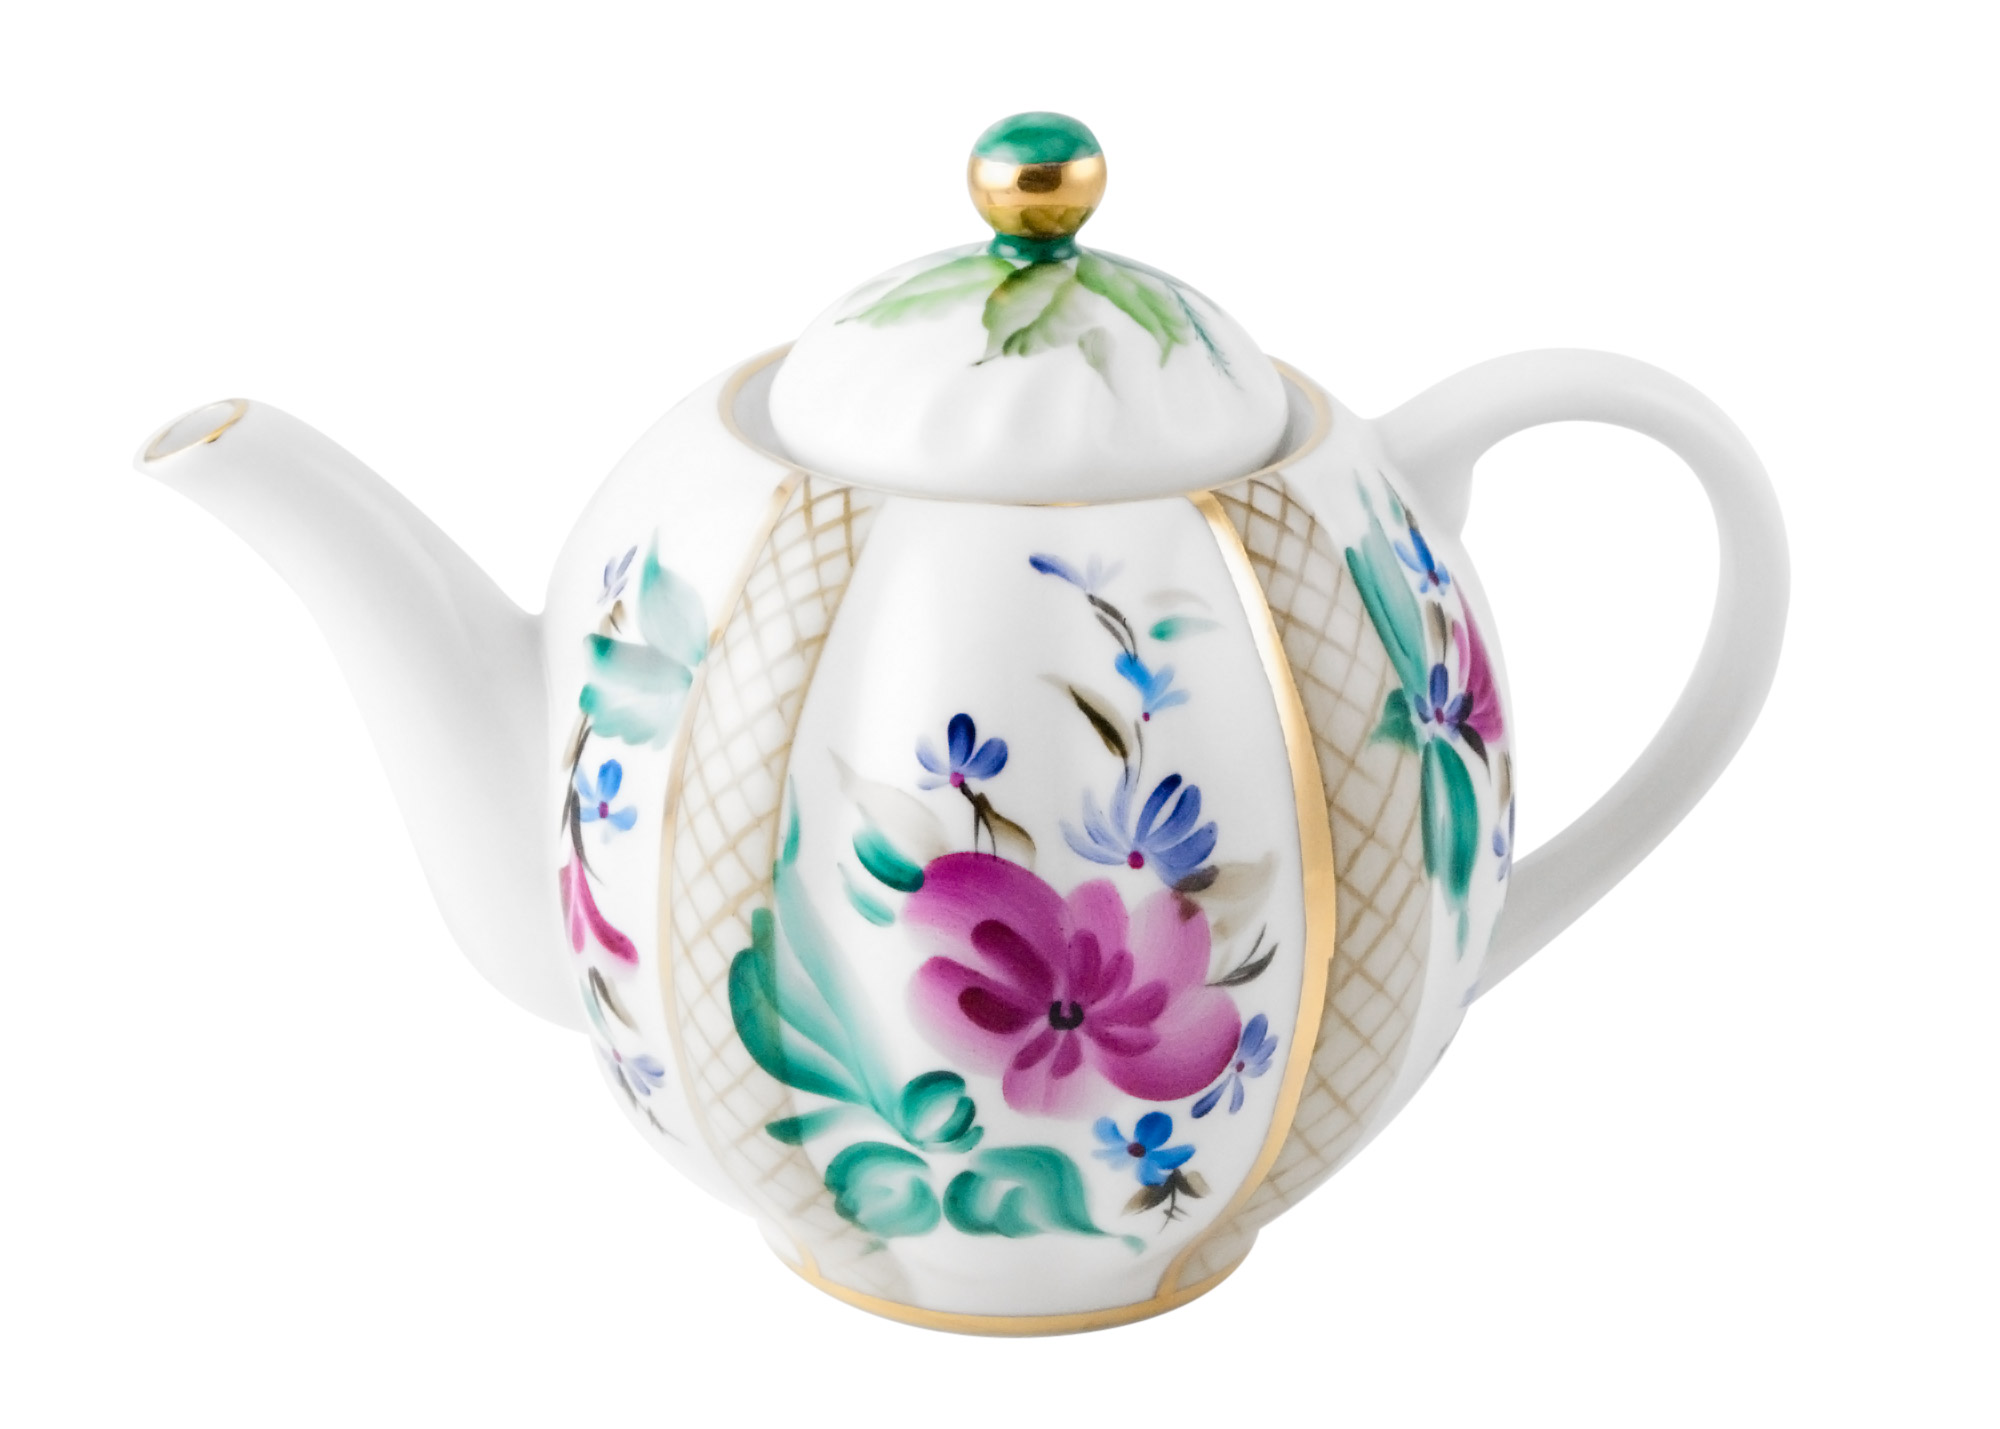 Buy Greenhouse Teapot at GoldenCockerel.com